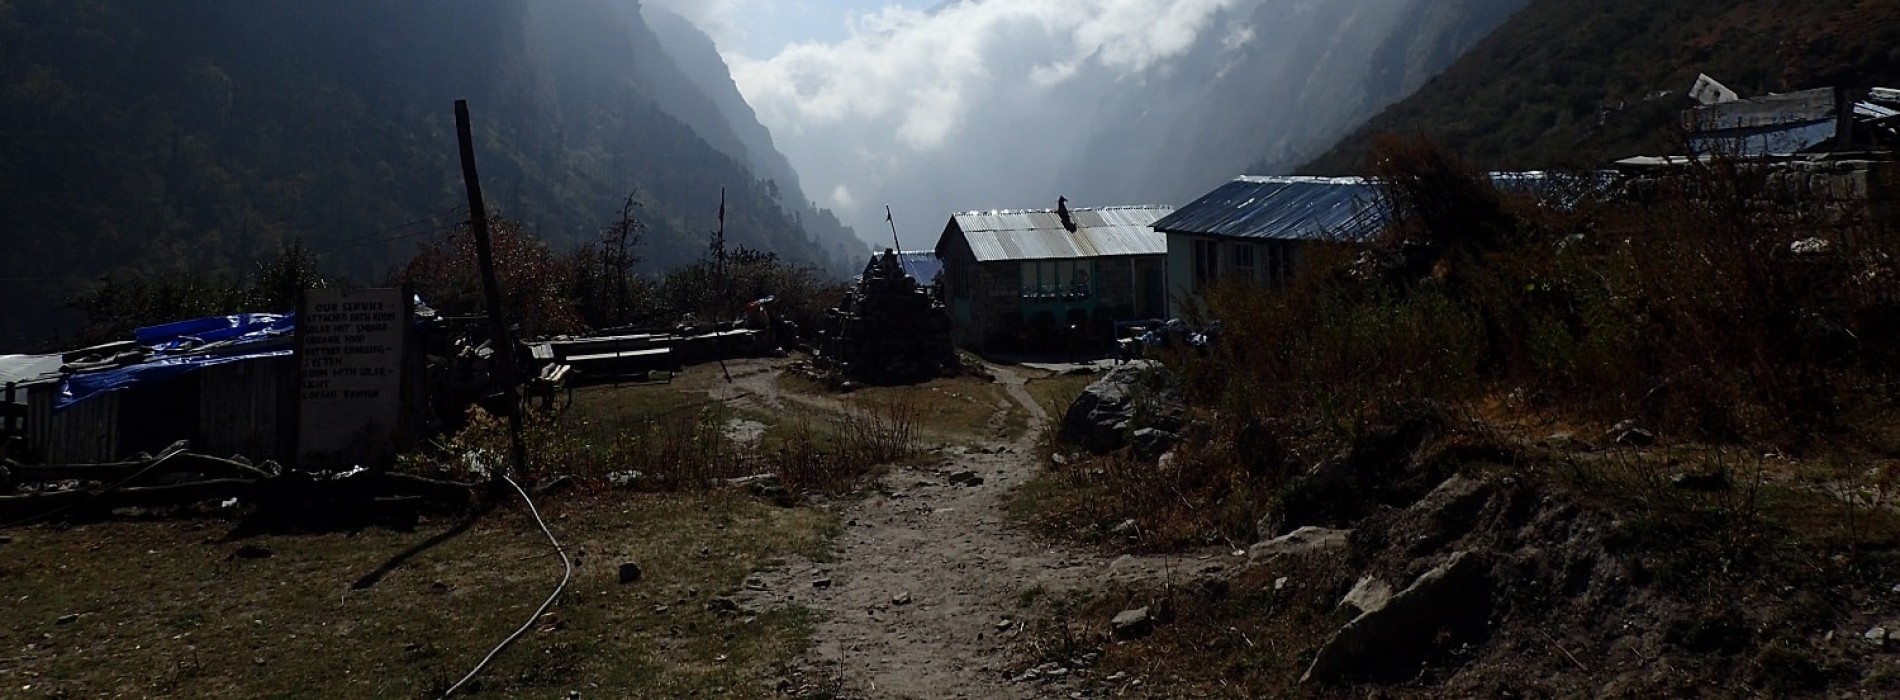 Villages set in the misty valleys